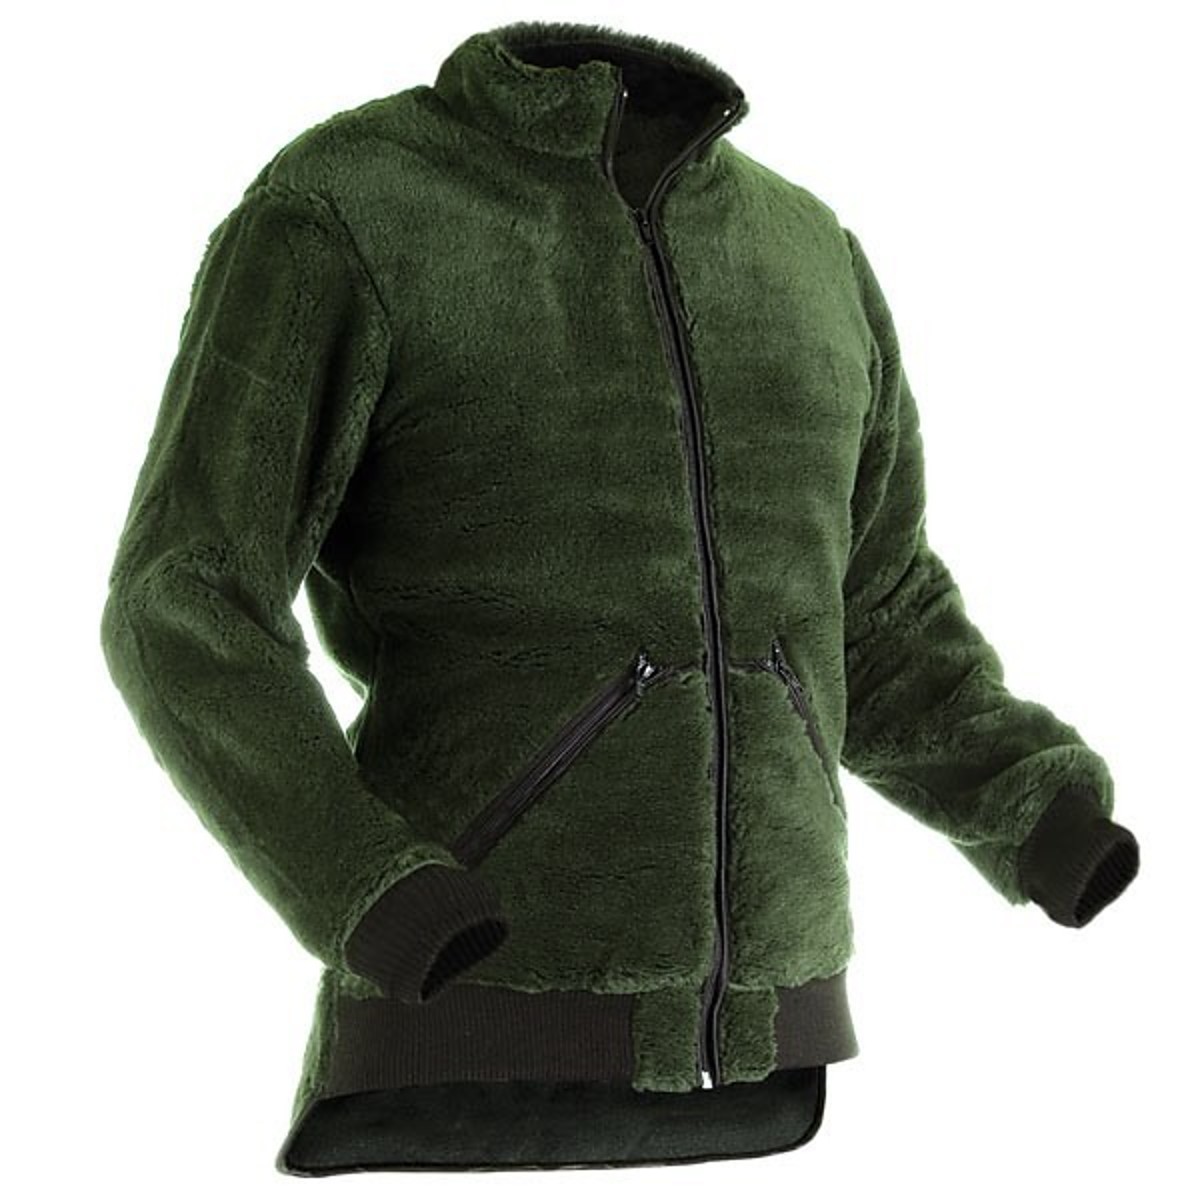 Pfanner Midland fleece jacket